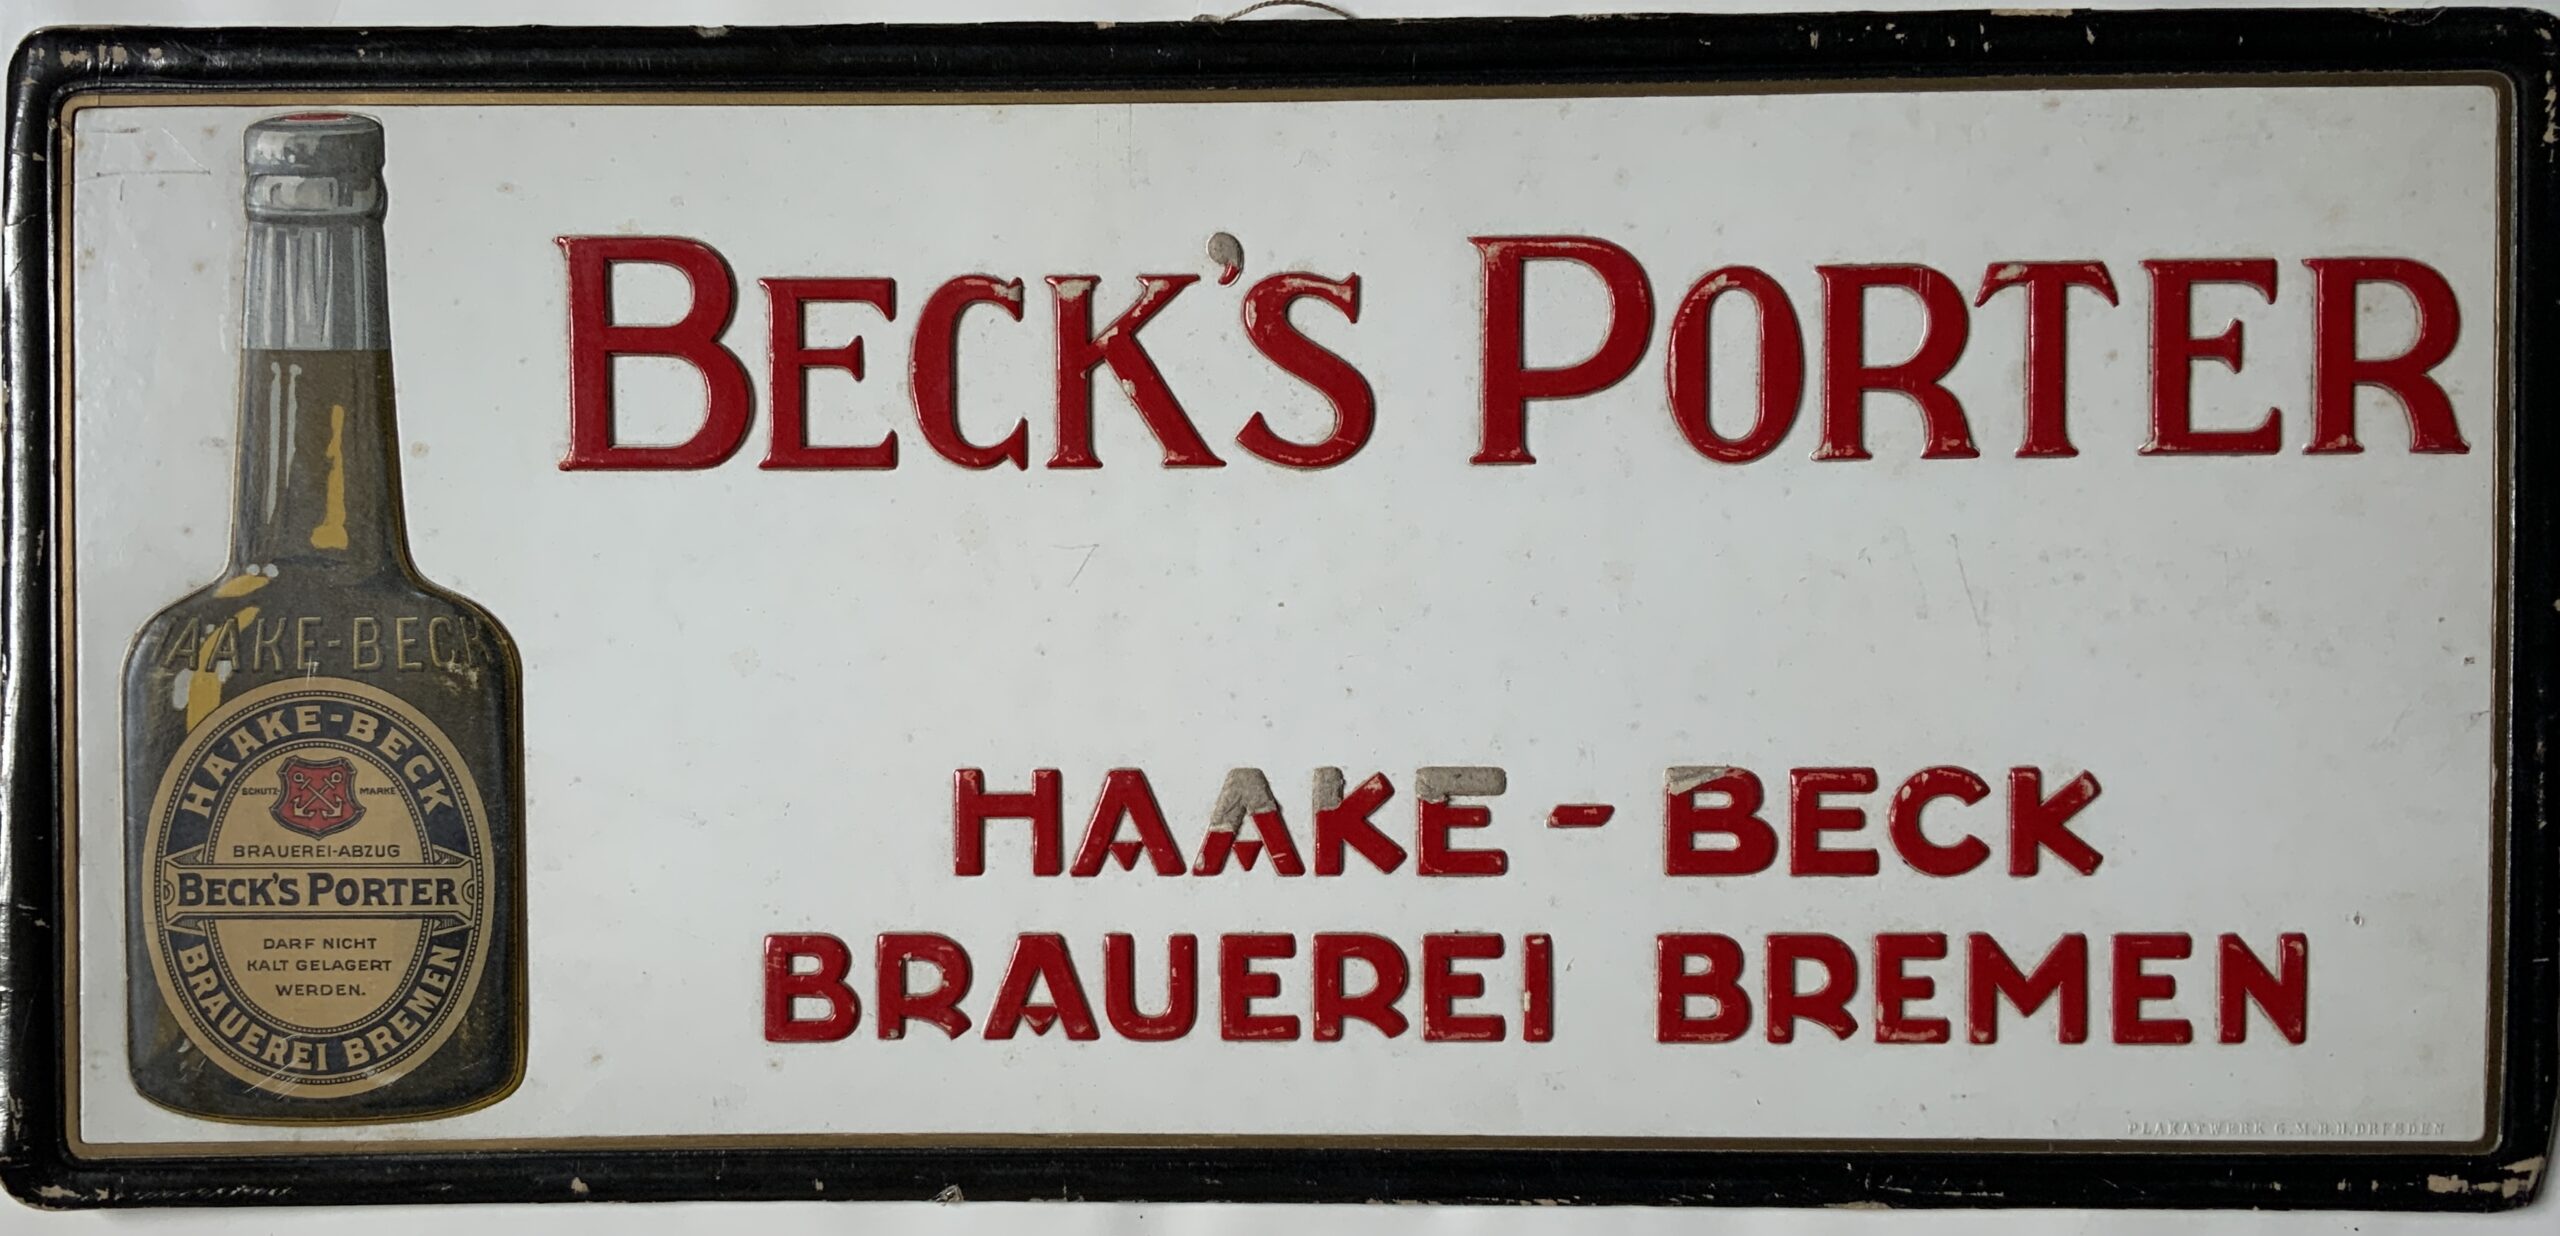 M131	BECK’S PORTER - HAAKE-BECK BRAUEREI BREMEN